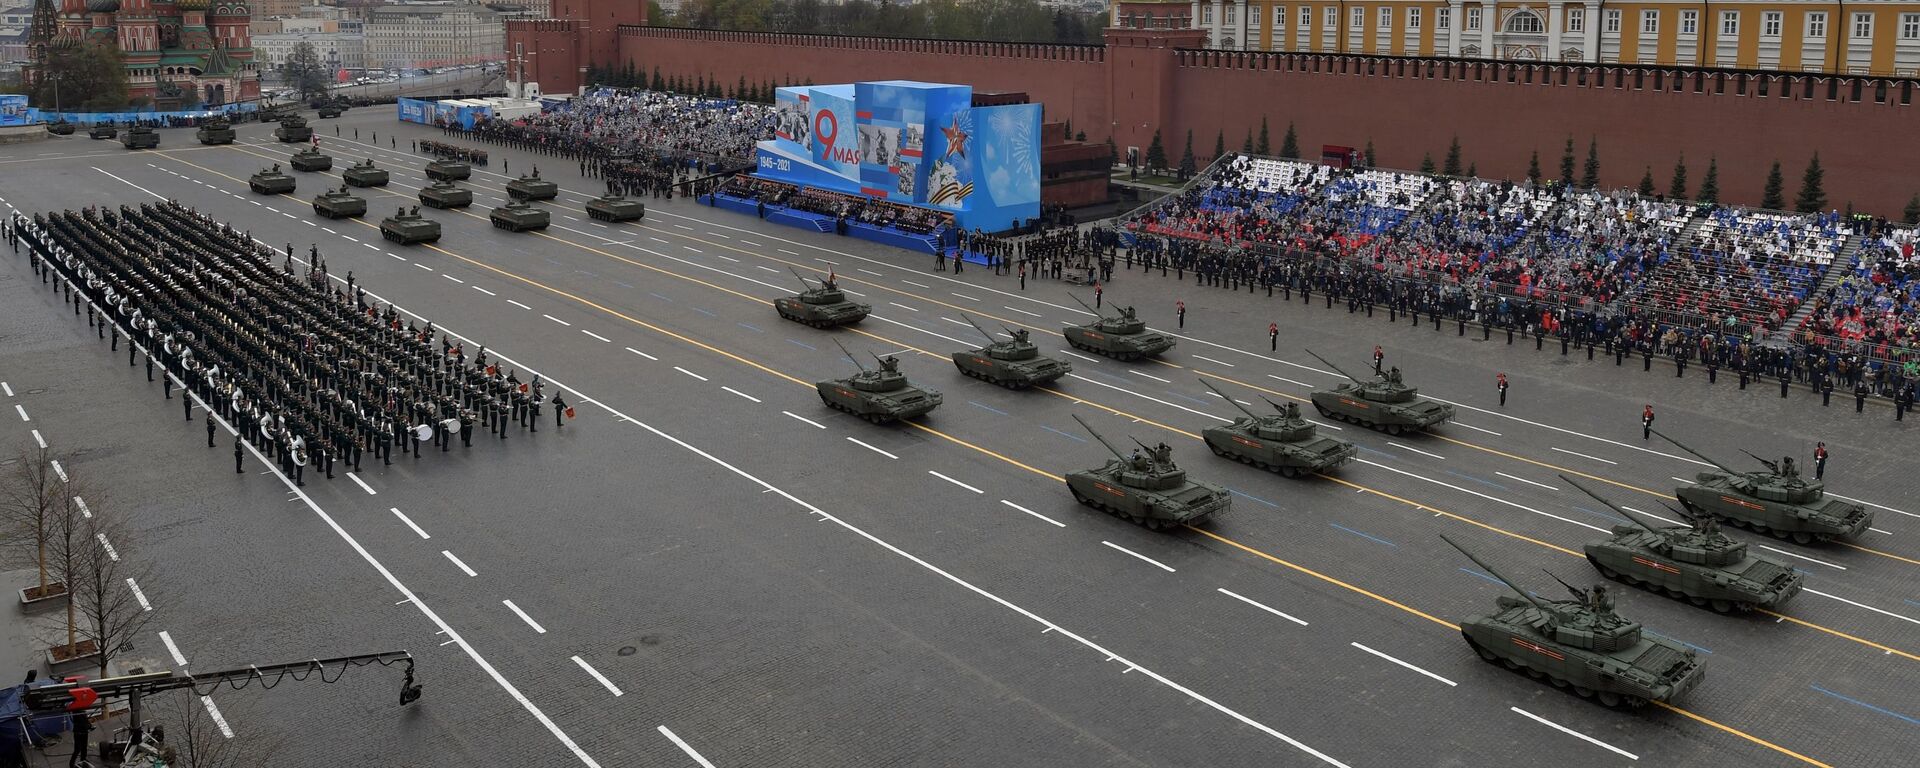 Tenkovi T-72B3M na vojnom delu Parade pobede povodom obeležavanja 76. godišnjice pobede u Drugom svetskom ratu - Sputnik Srbija, 1920, 16.05.2021